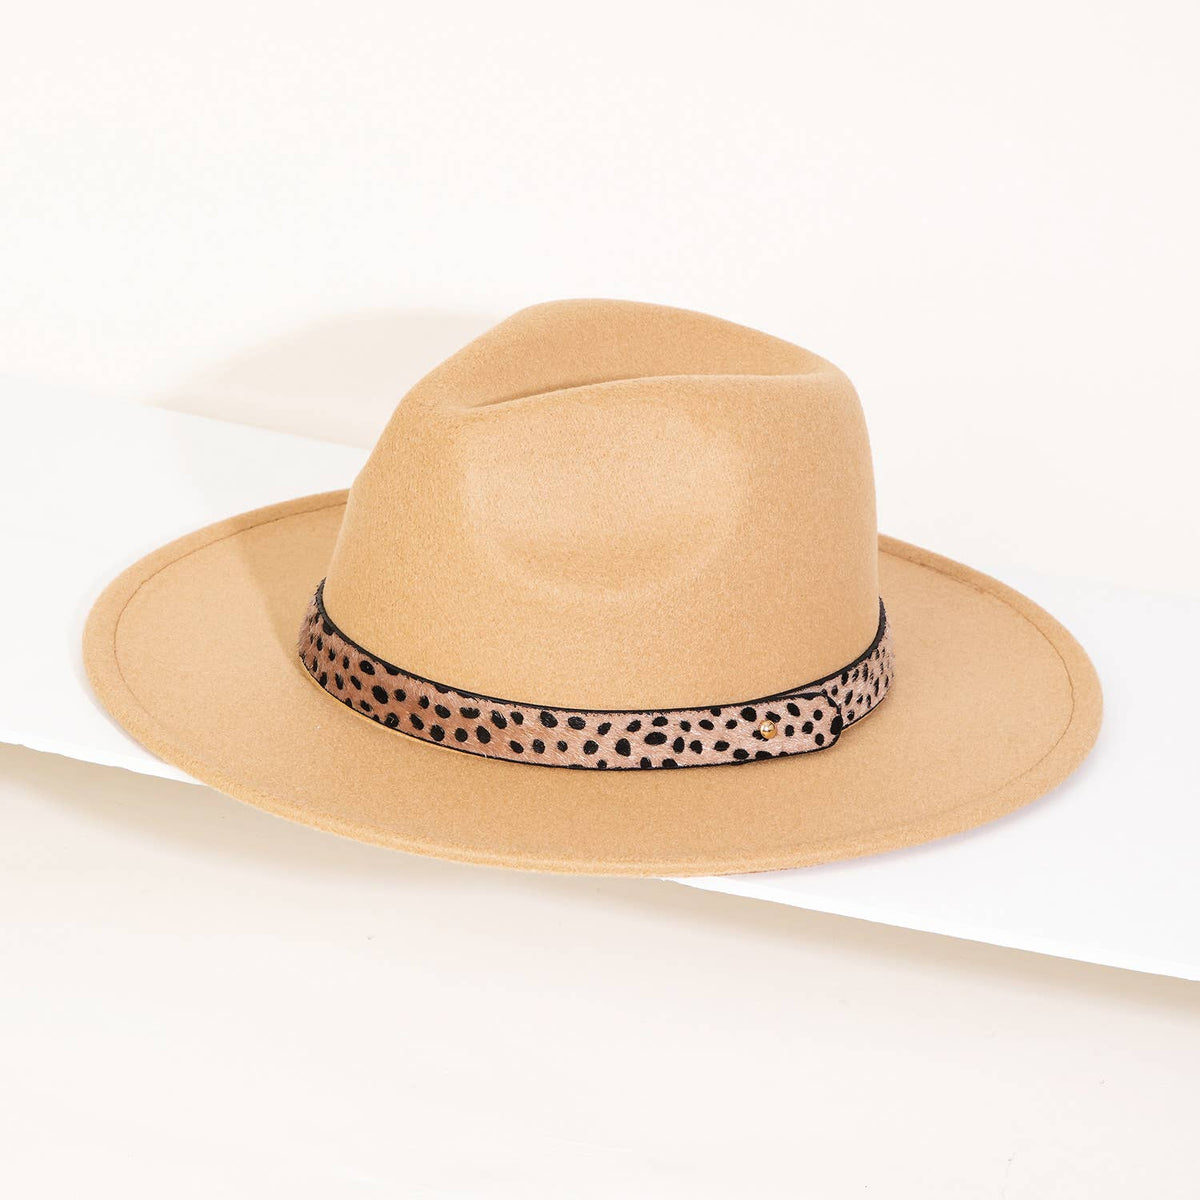 Cheetah Strap Fedora Fashion Hat: TAN